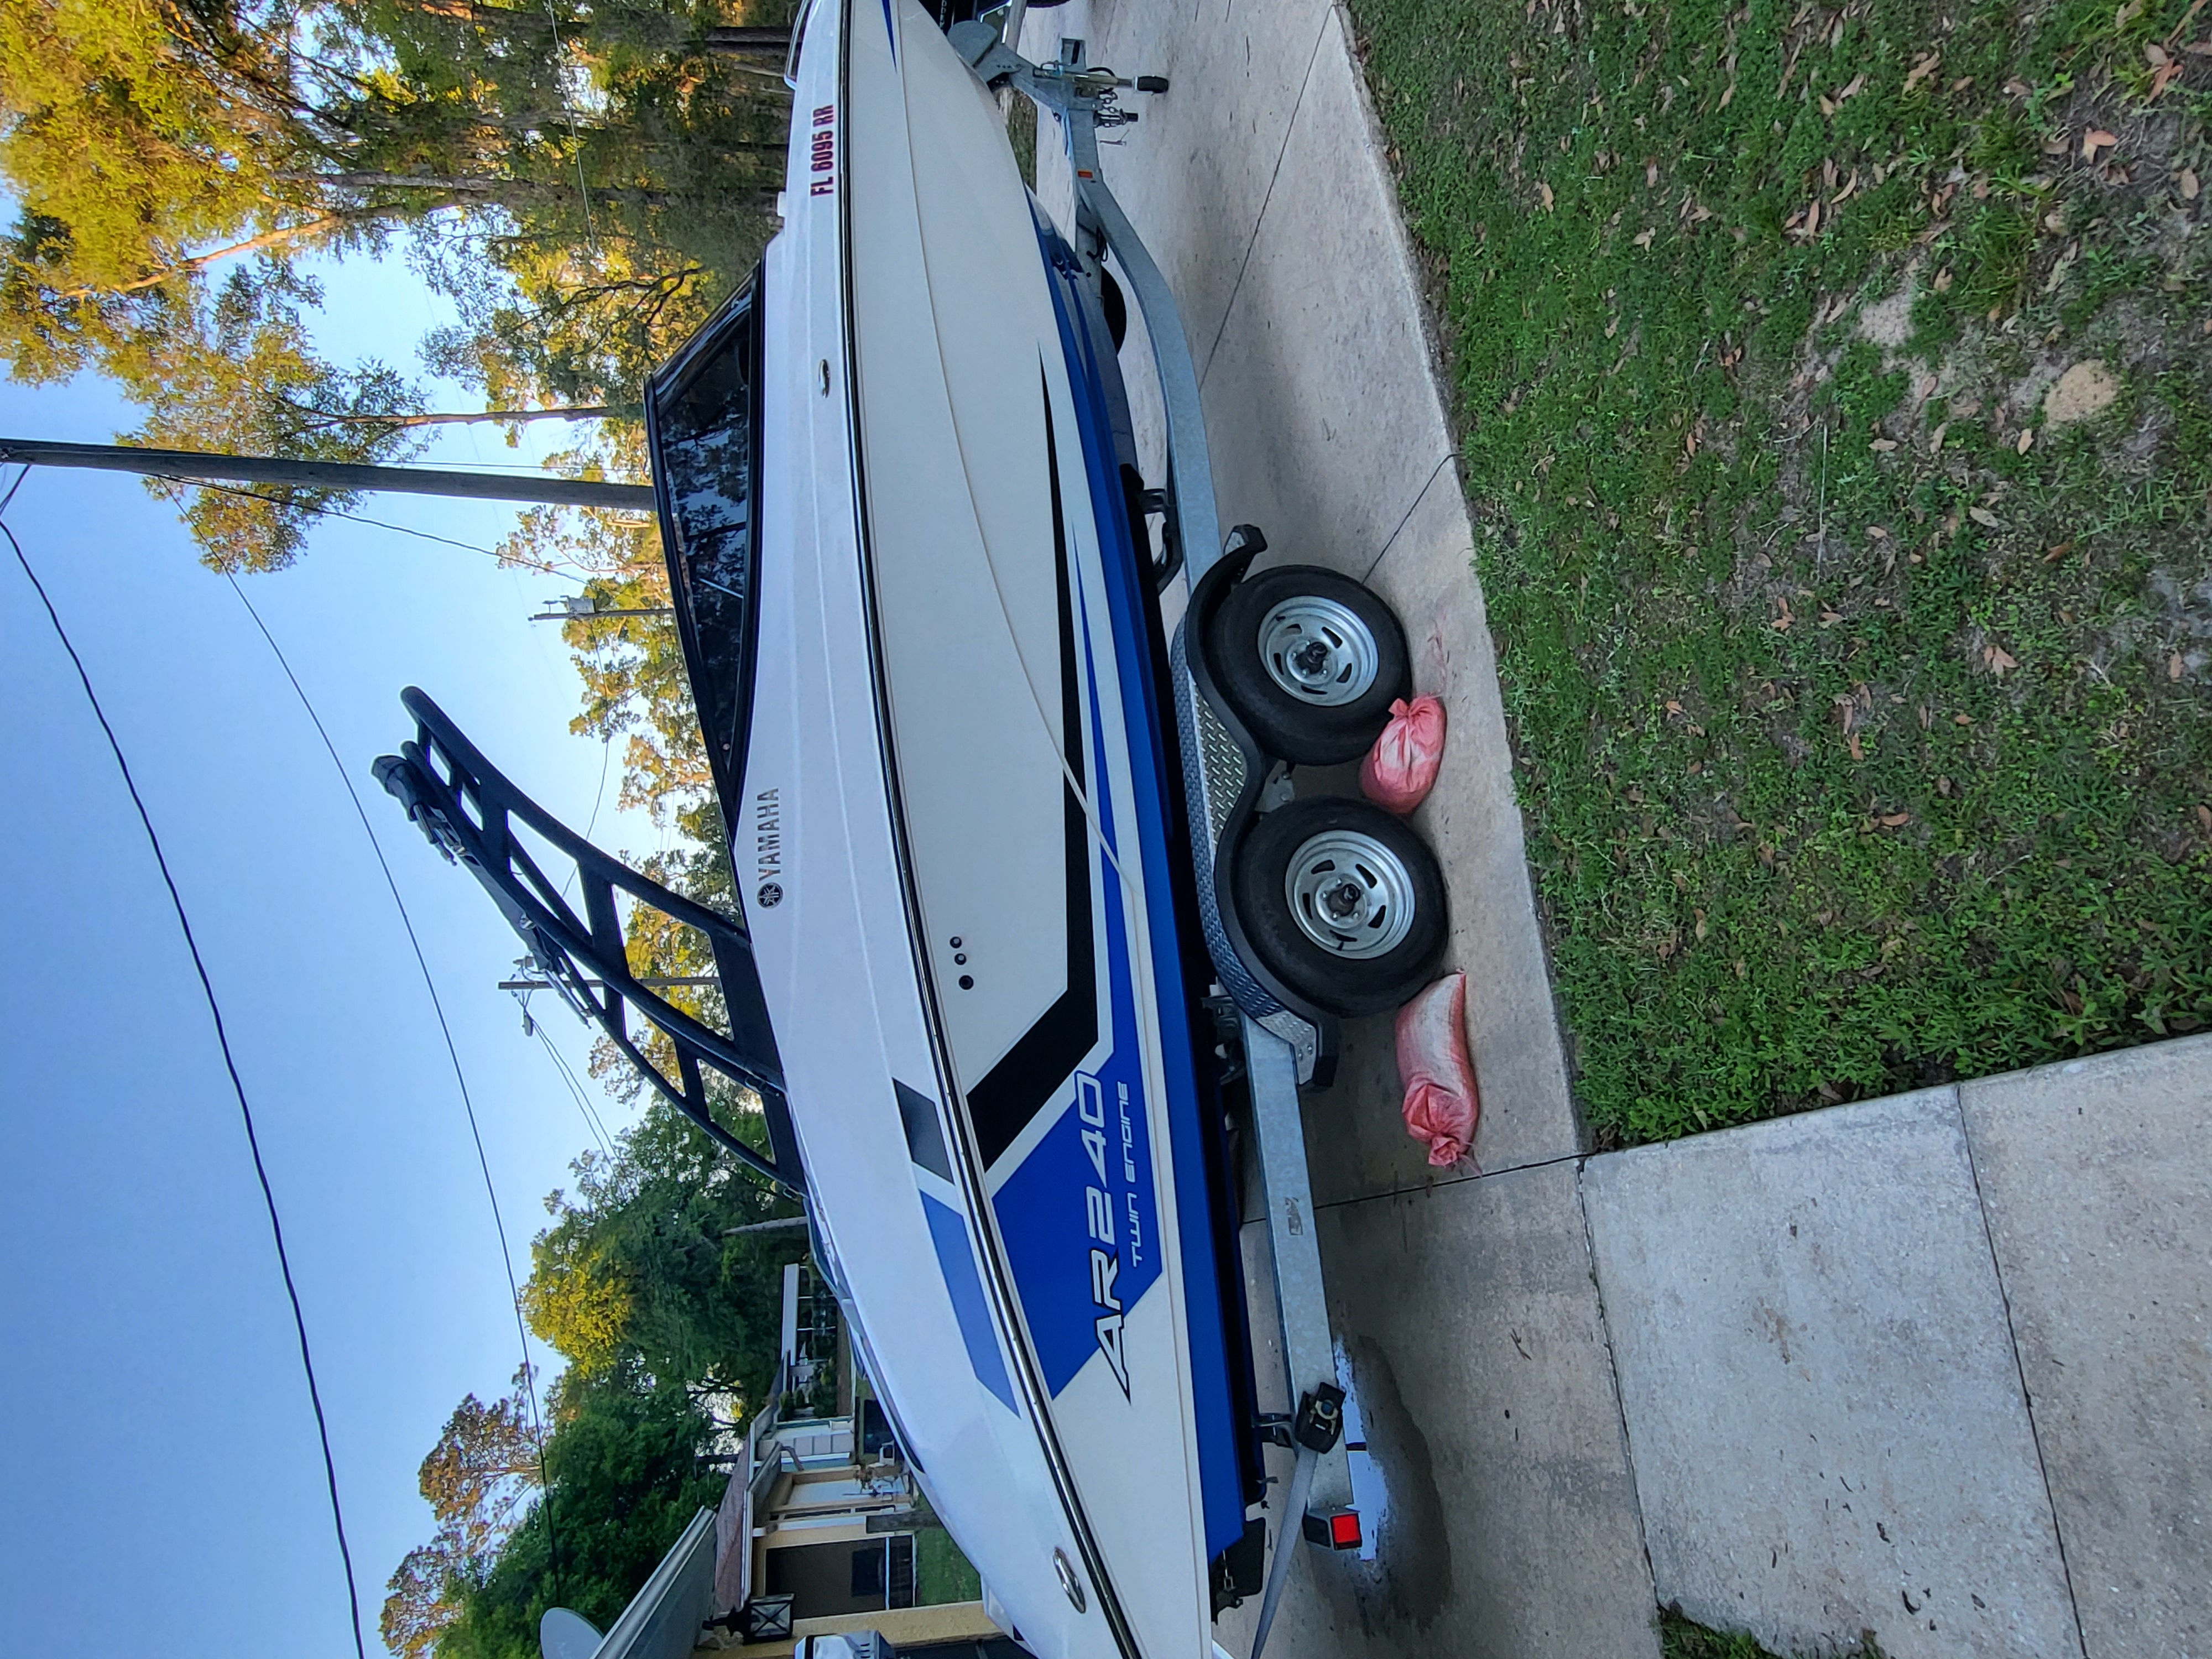 2018 Yamaha Ar240 Power boat for sale in Ocala, FL - image 3 